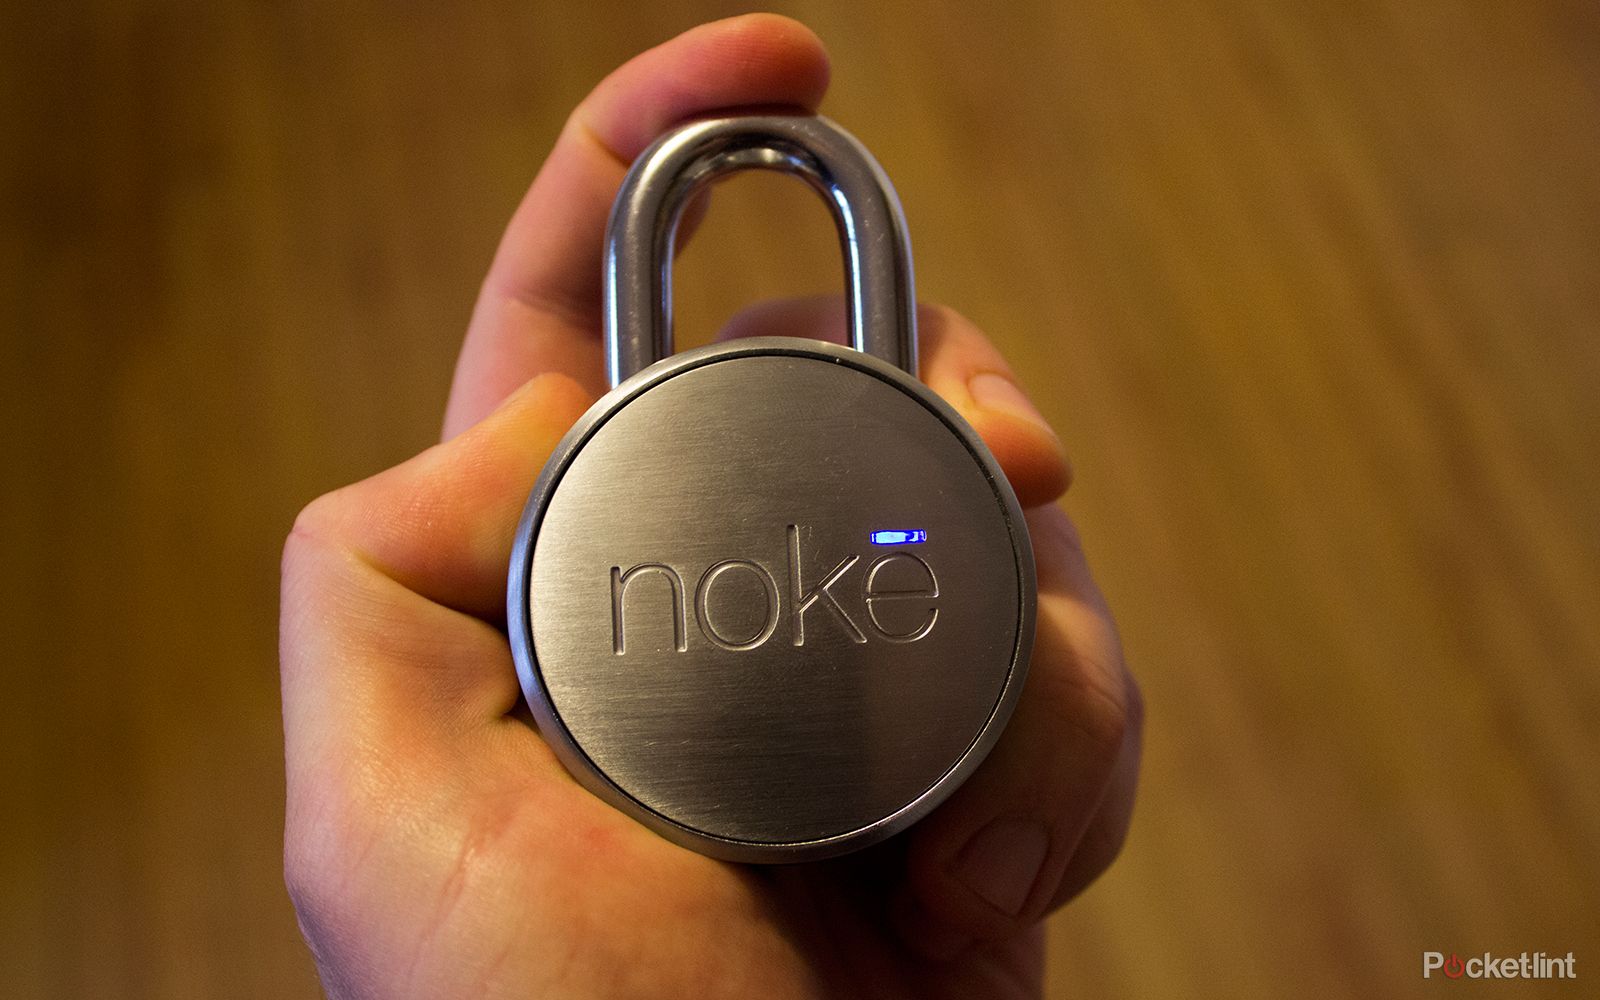 noke bluetooth smartlock makes access awesome image 1